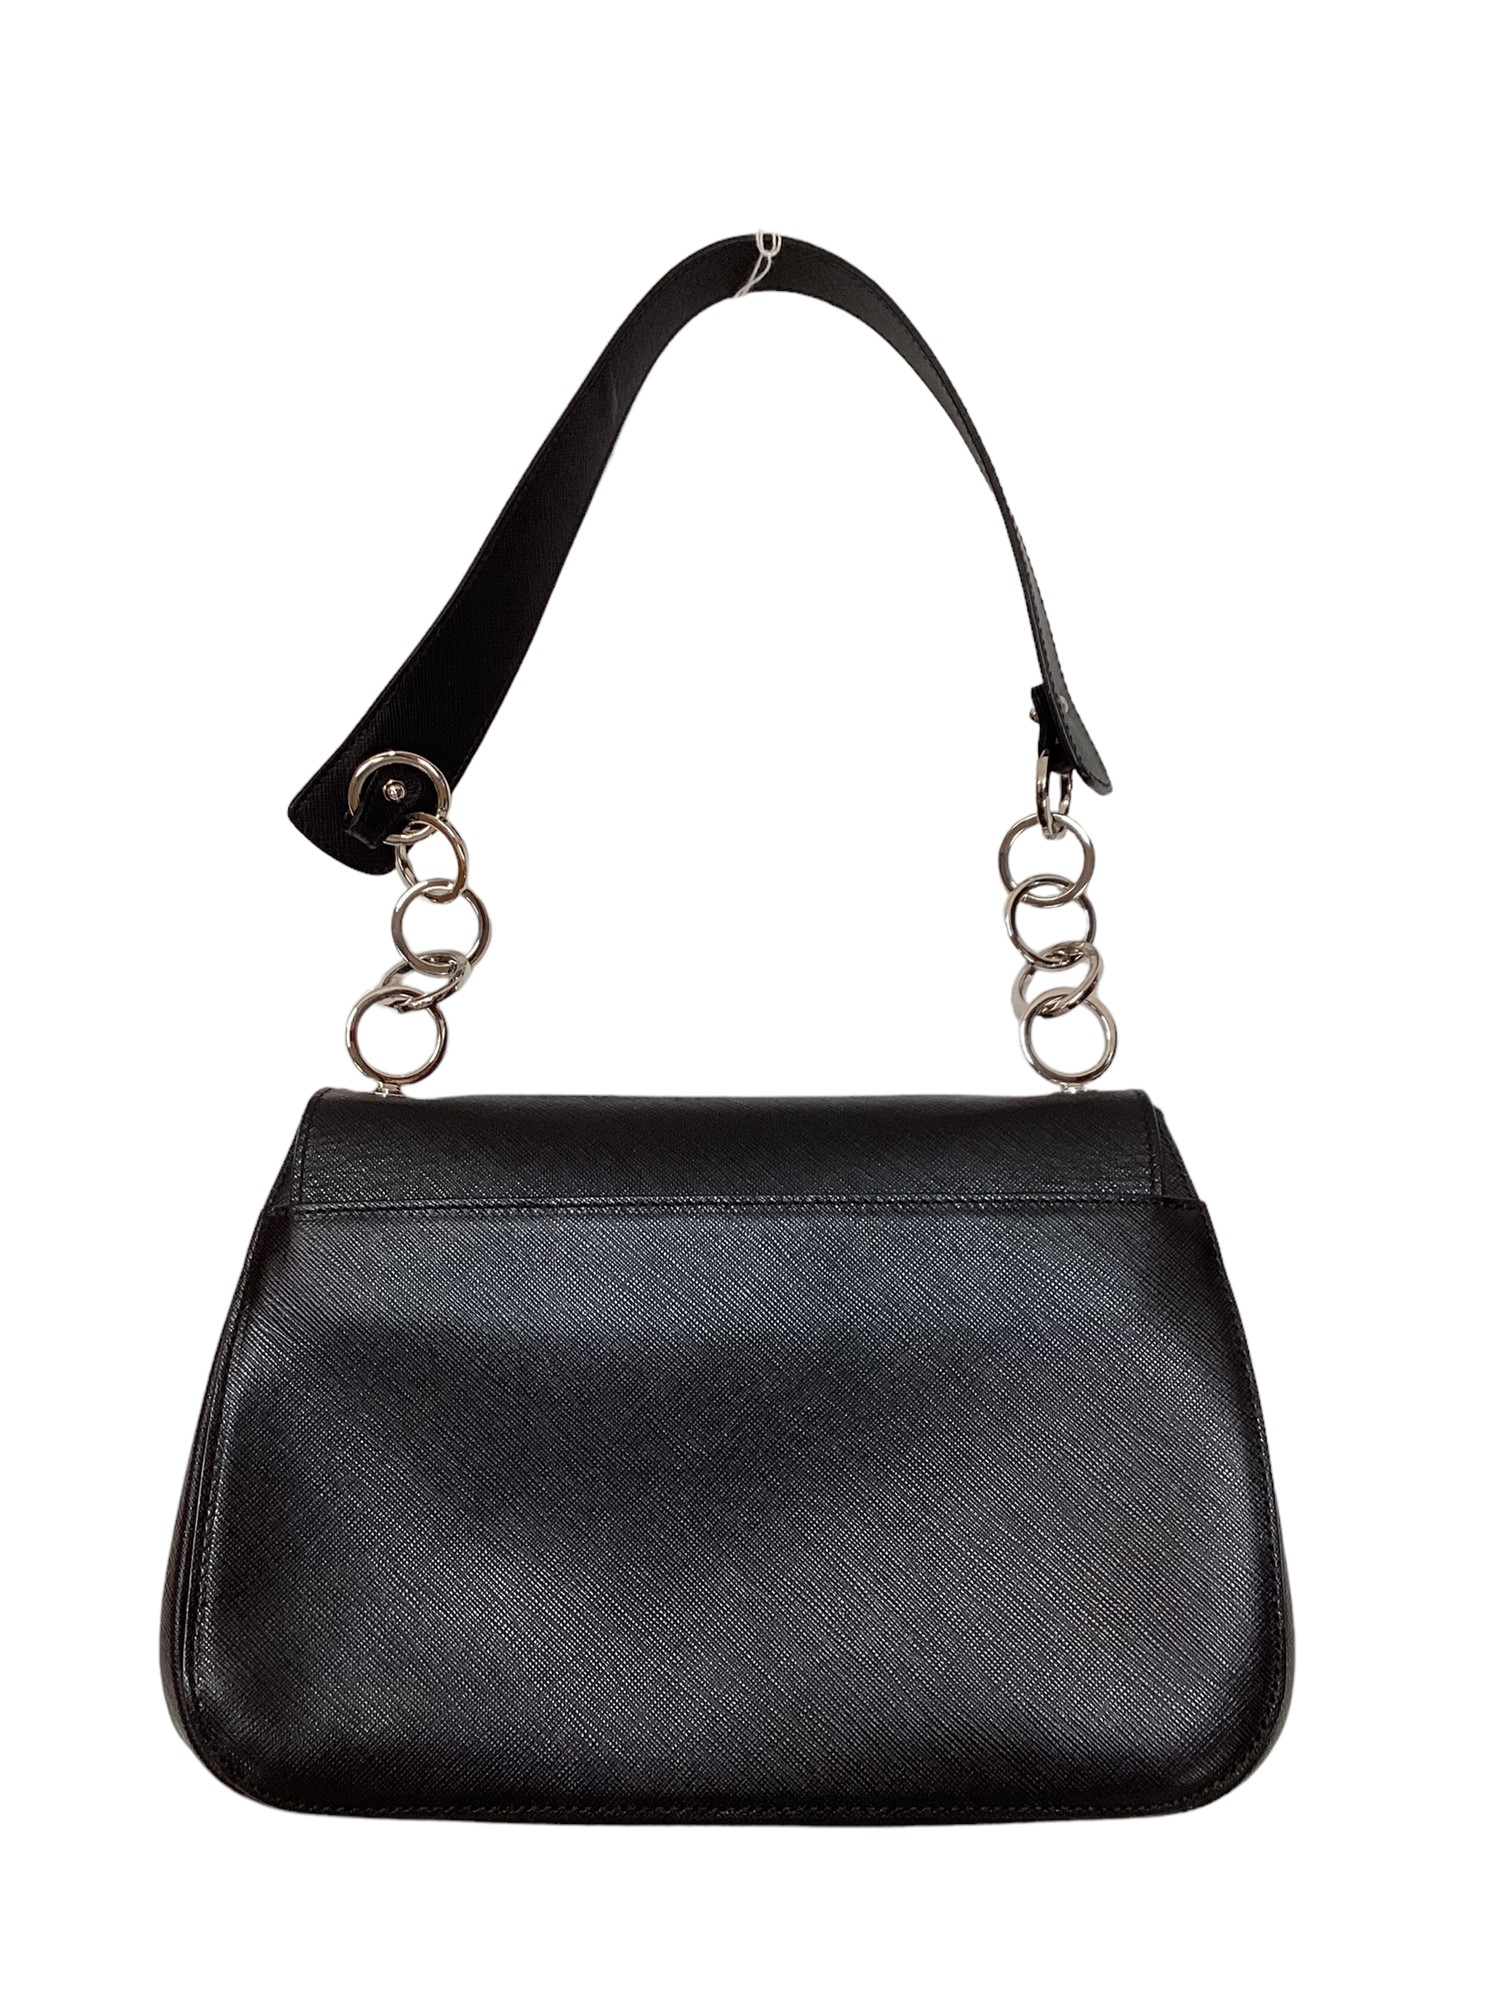 Lot 2088 - Salvatore Ferragamo black leather handbag